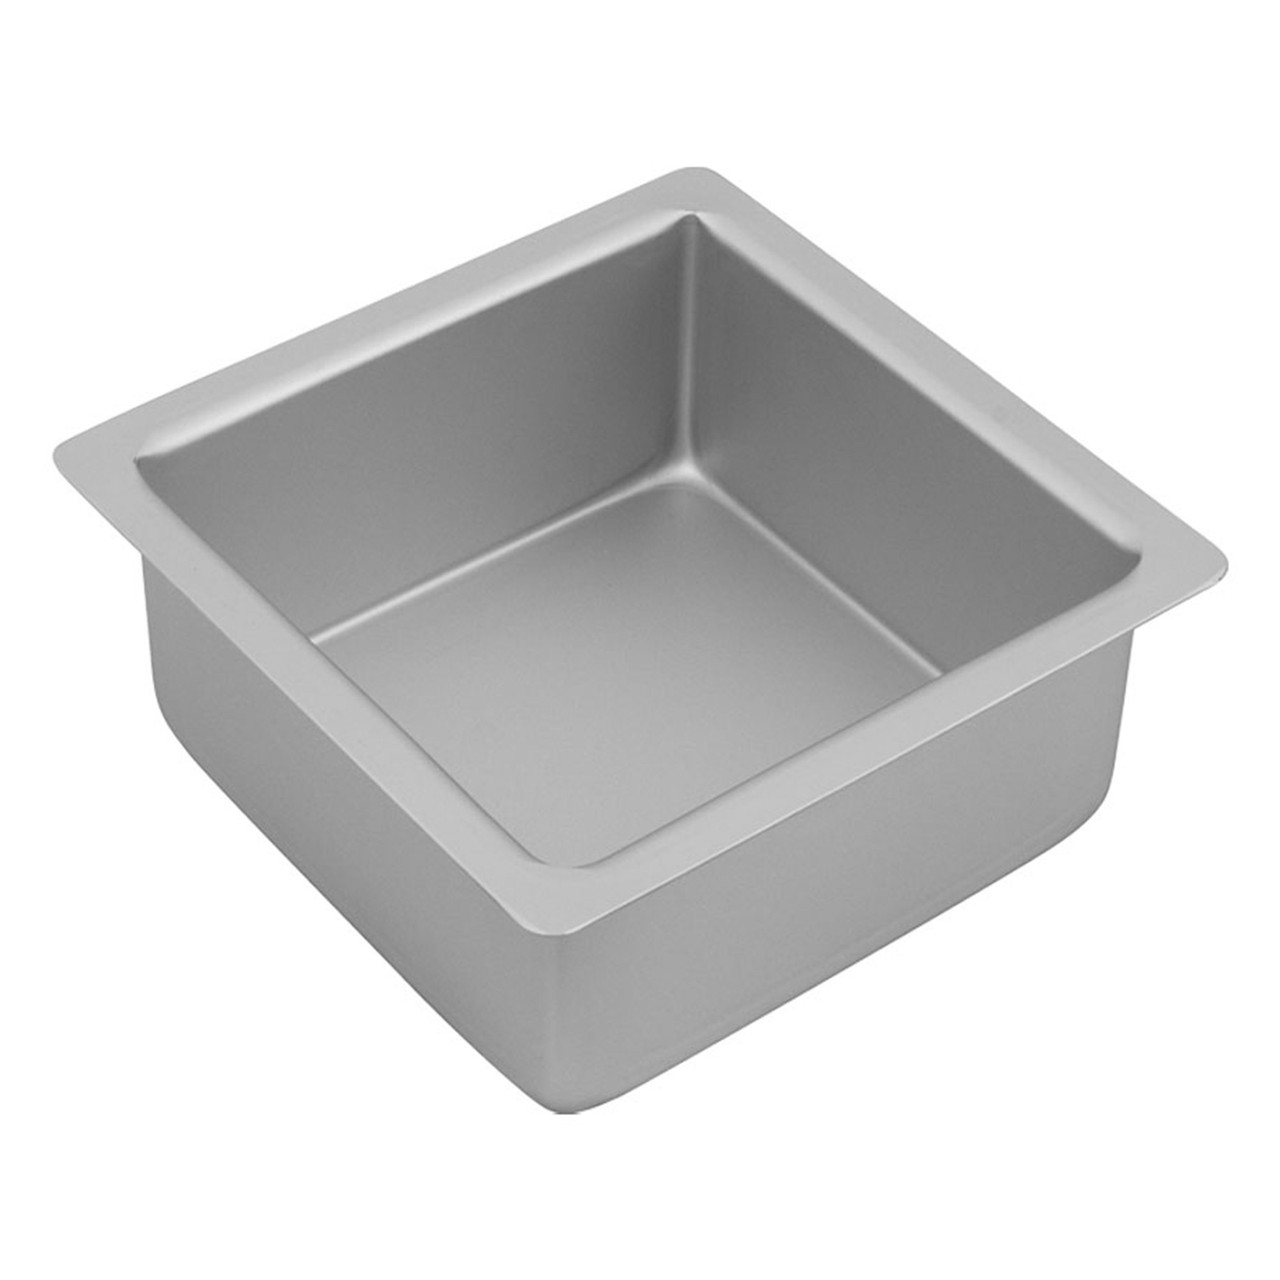 VARDAGEN Cake pan, silver color - IKEA